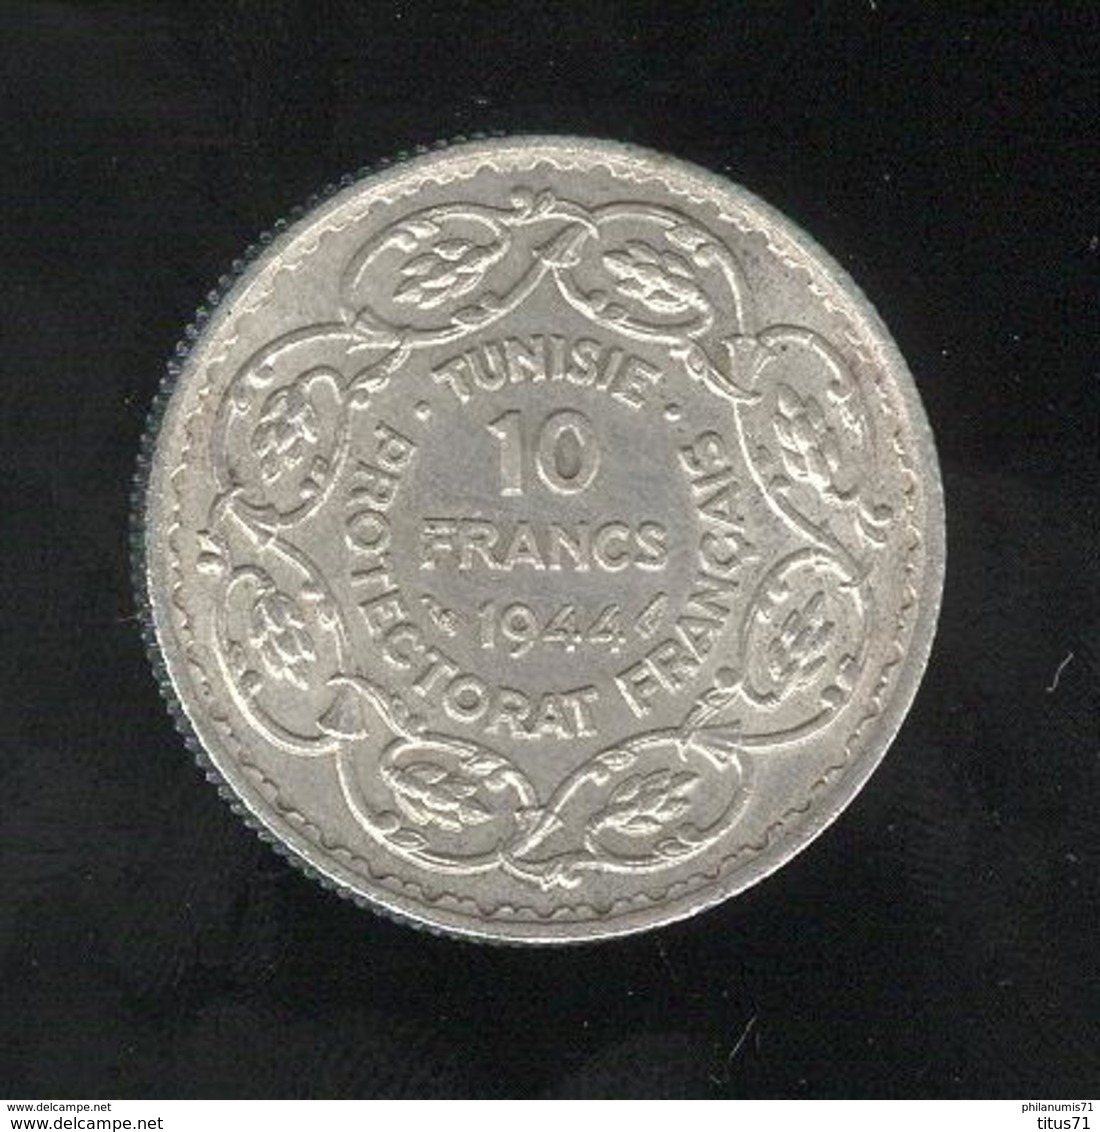 10 Francs Tunisie Mohamed Lamine Bey 1944 - Protectorat Français - SUP - Mintage 2206 Coin ! - Tunisie